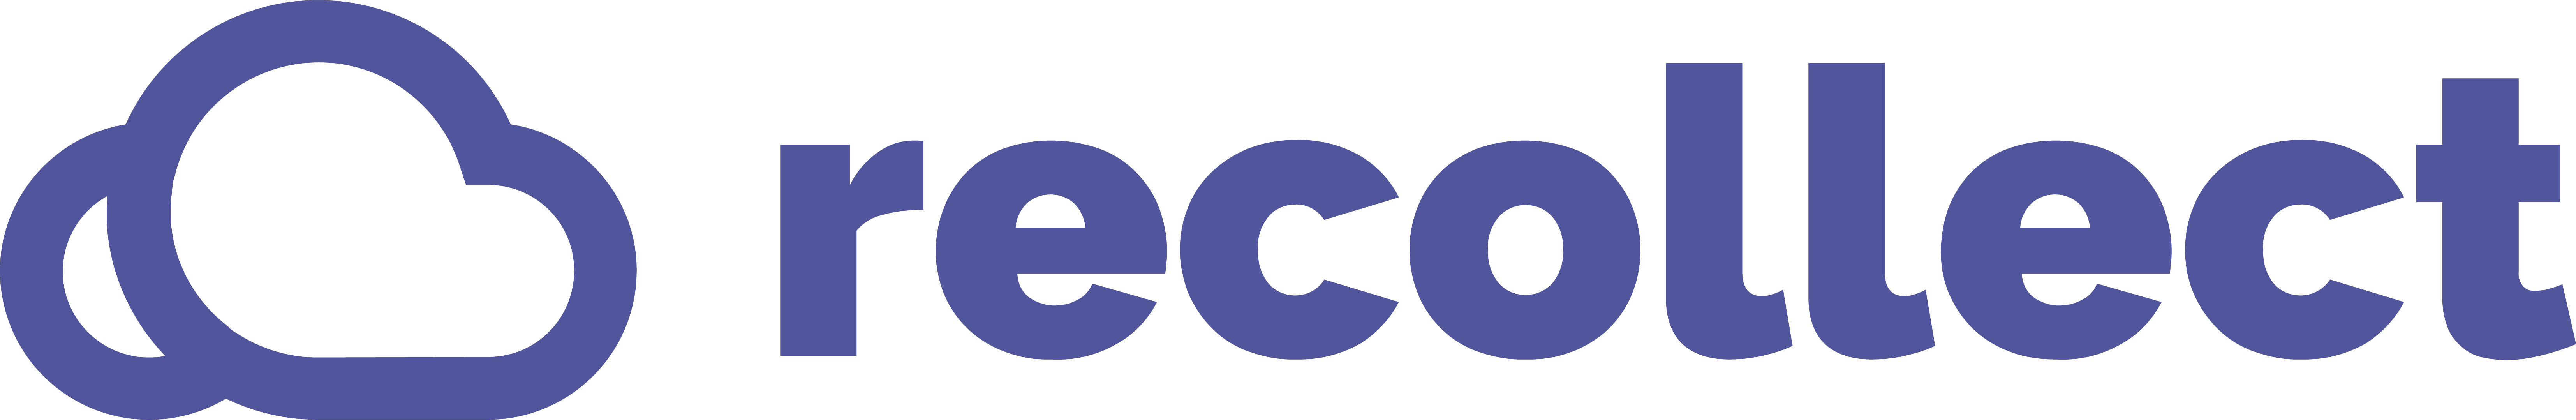 Recollect company logo